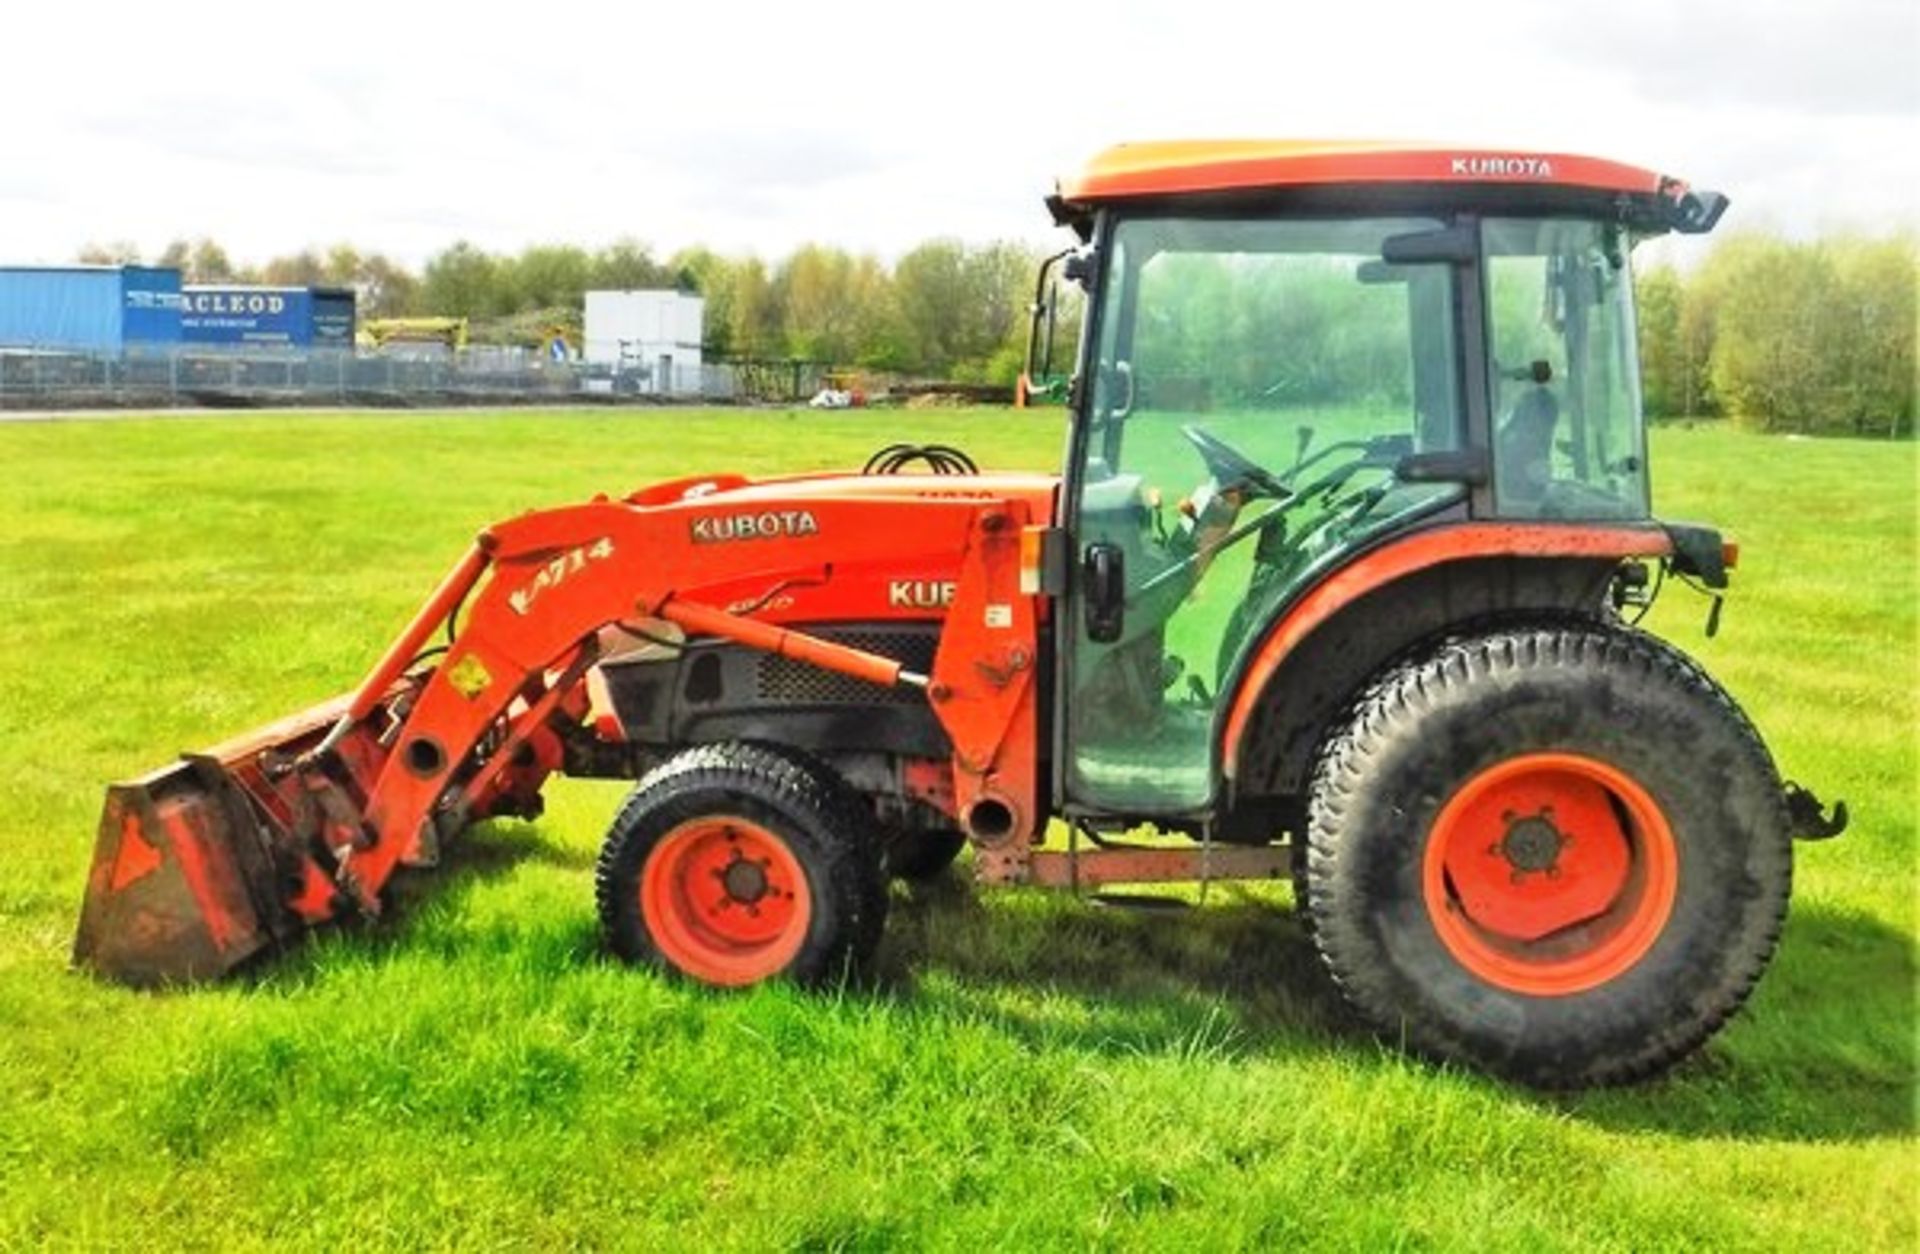 KUBOTA L4240 tractor c/w loader model LA714. Reg No SP08 EOK, s/n 3029671535. 3285 hrs (not verified - Image 16 of 17